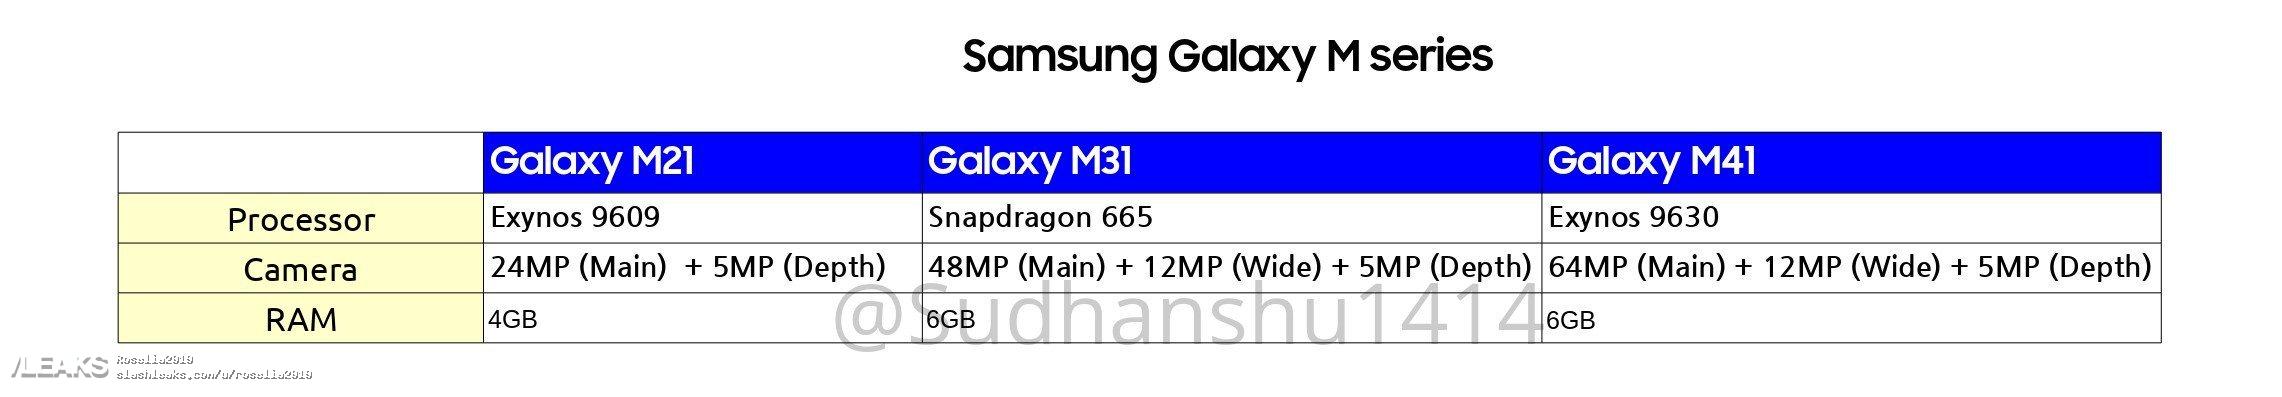 Rincian pertama Samsung Galaxy M21, Galaxy M31 dan Galaxy M41 1